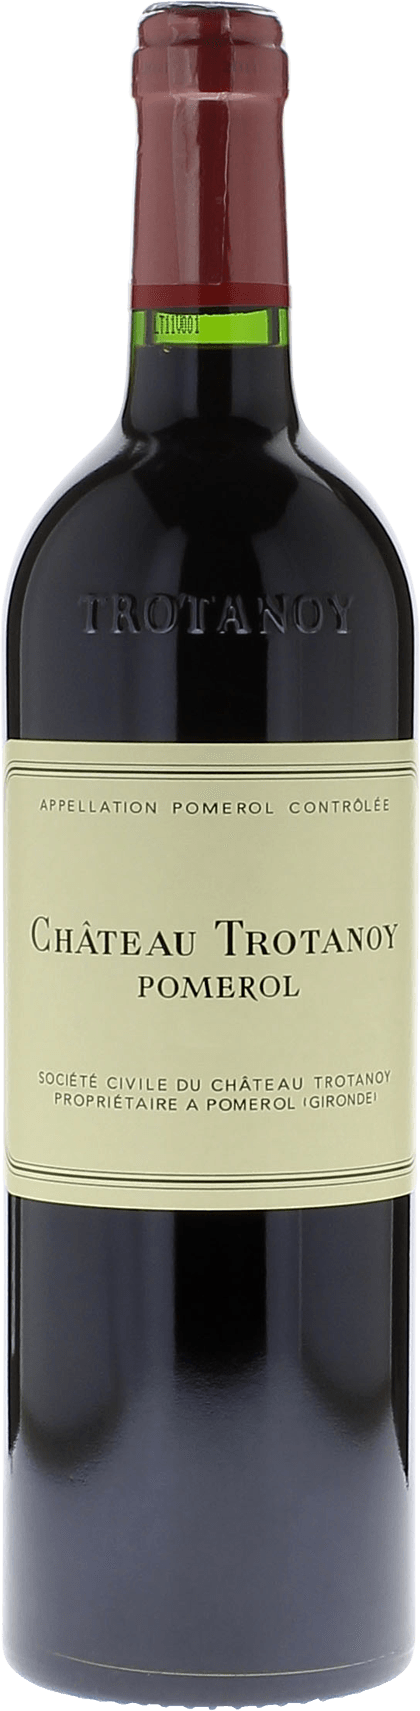 Trotanoy 2020  Pomerol, Bordeaux rouge